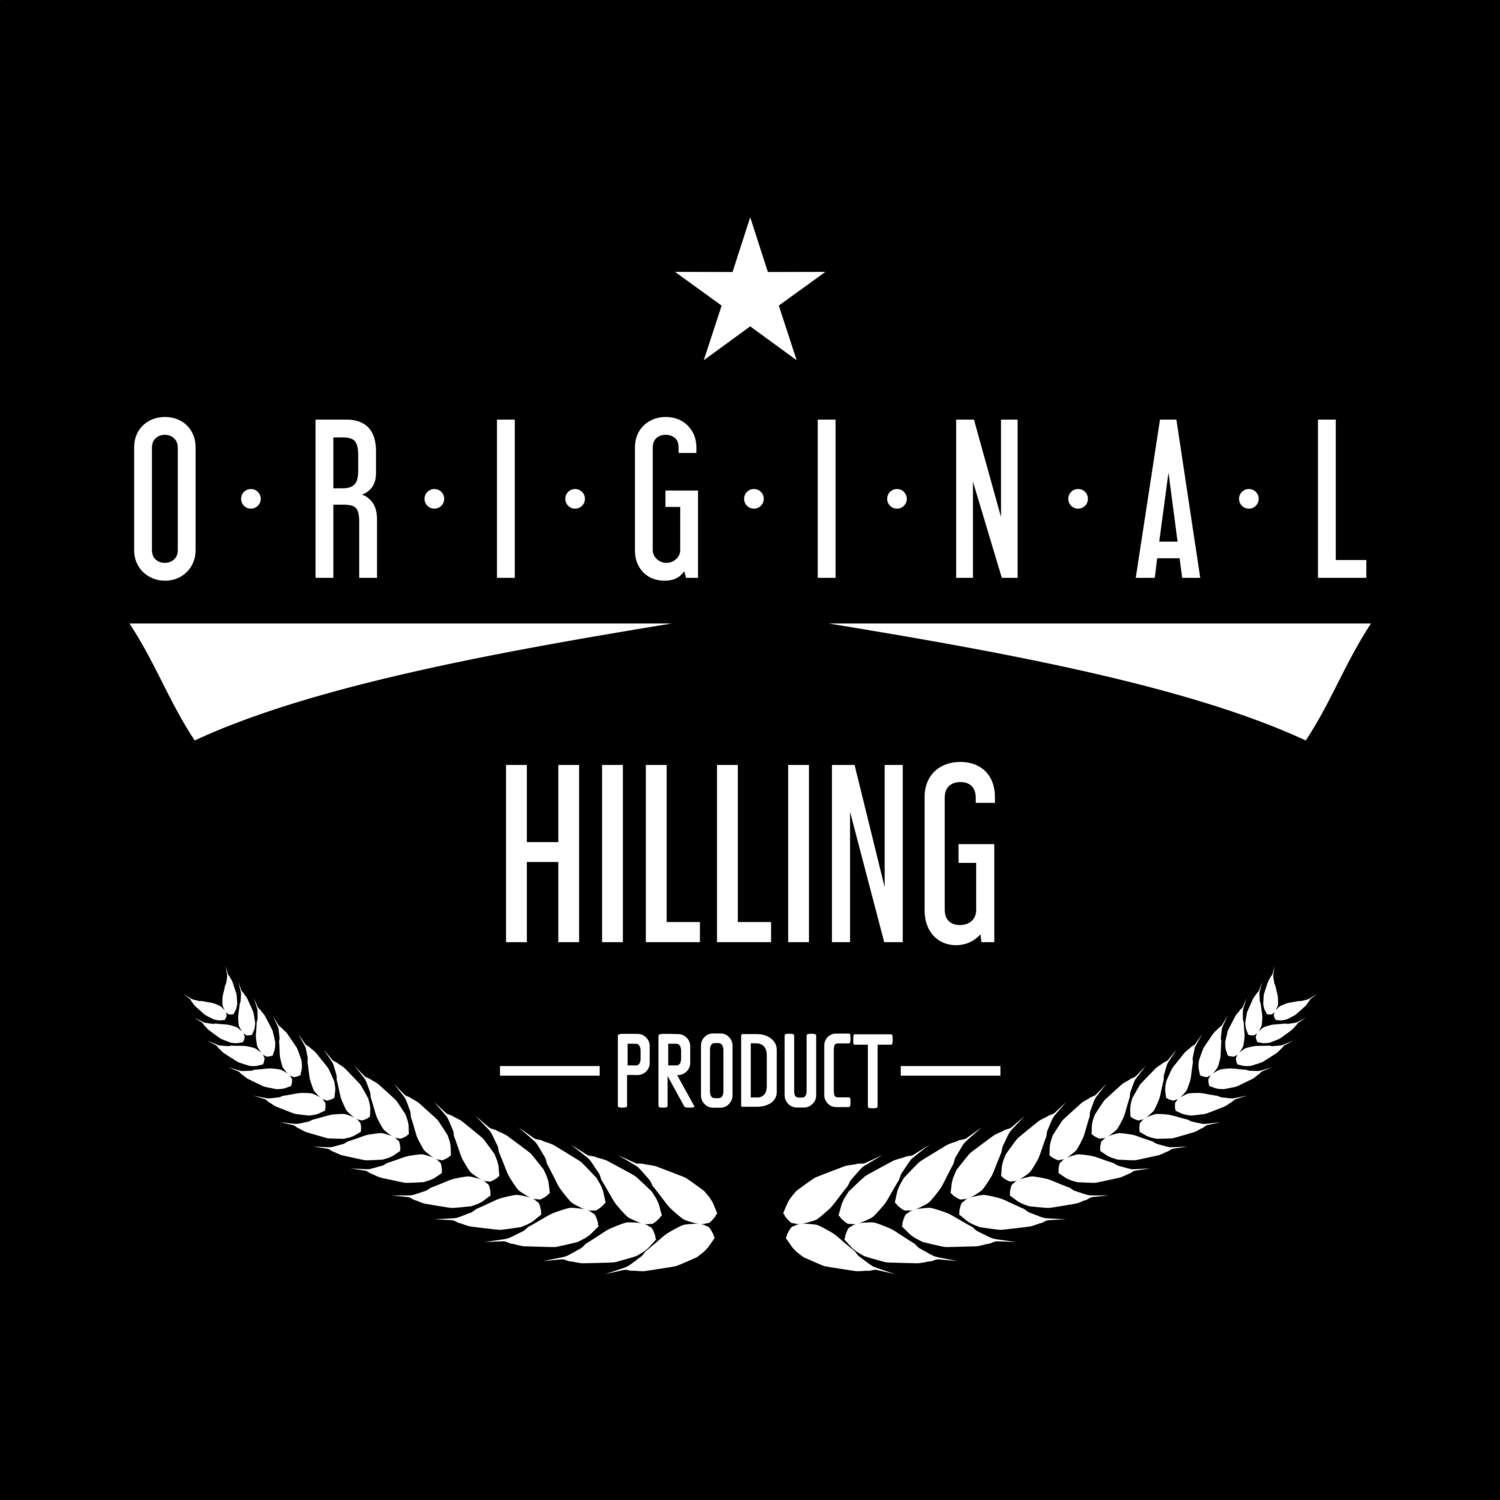 Hilling T-Shirt »Original Product«